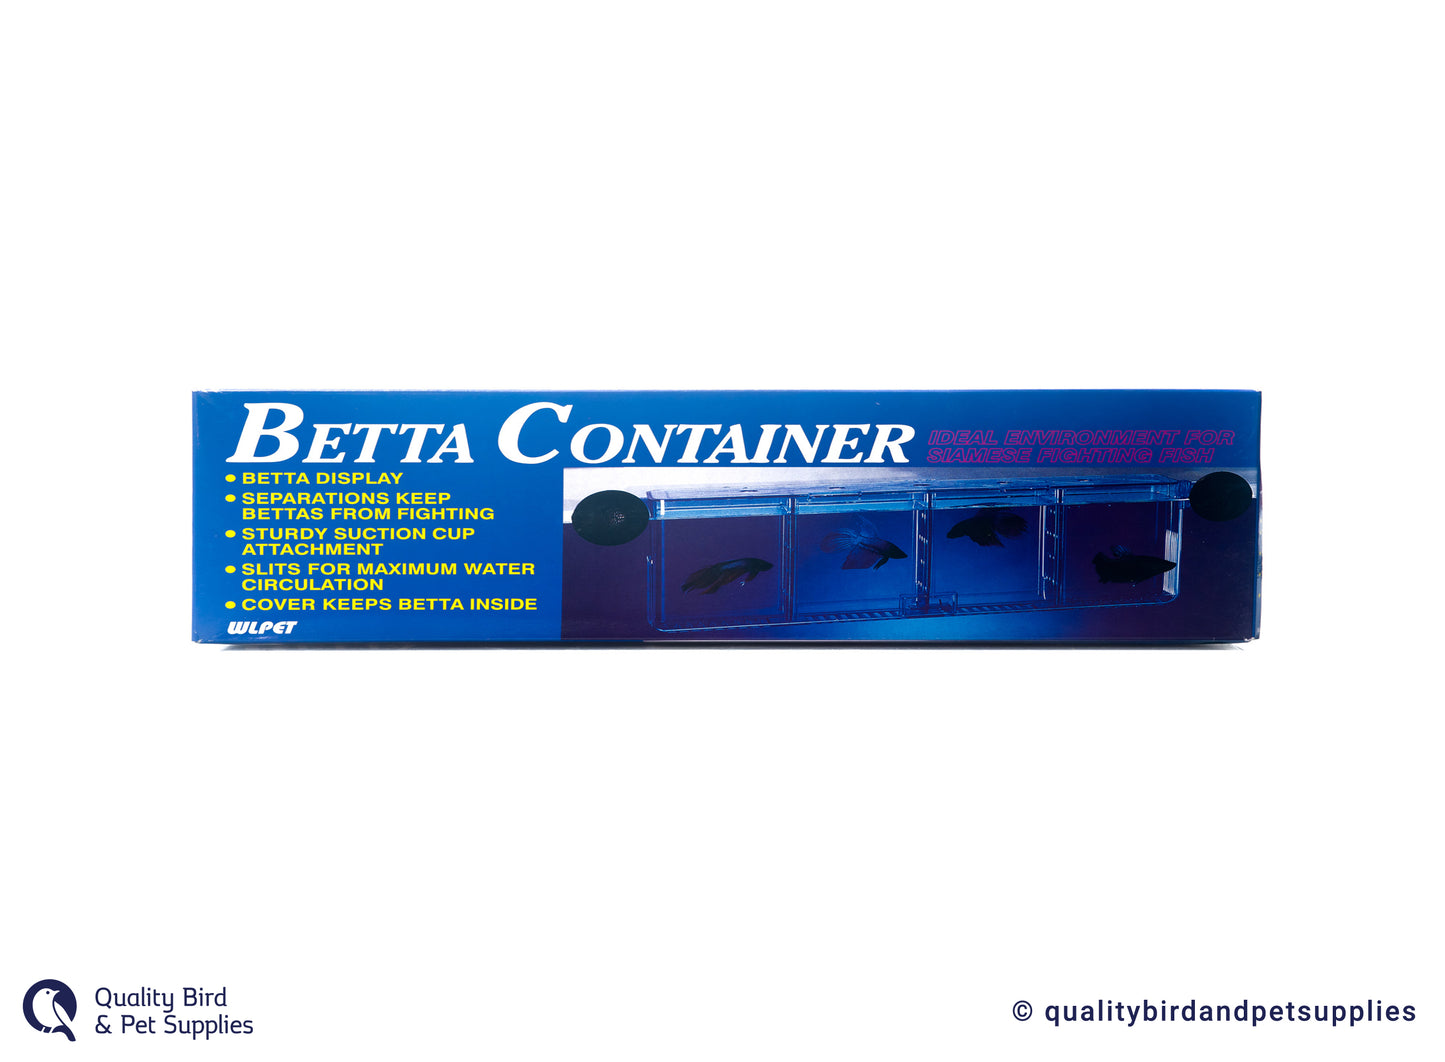 Betta Container